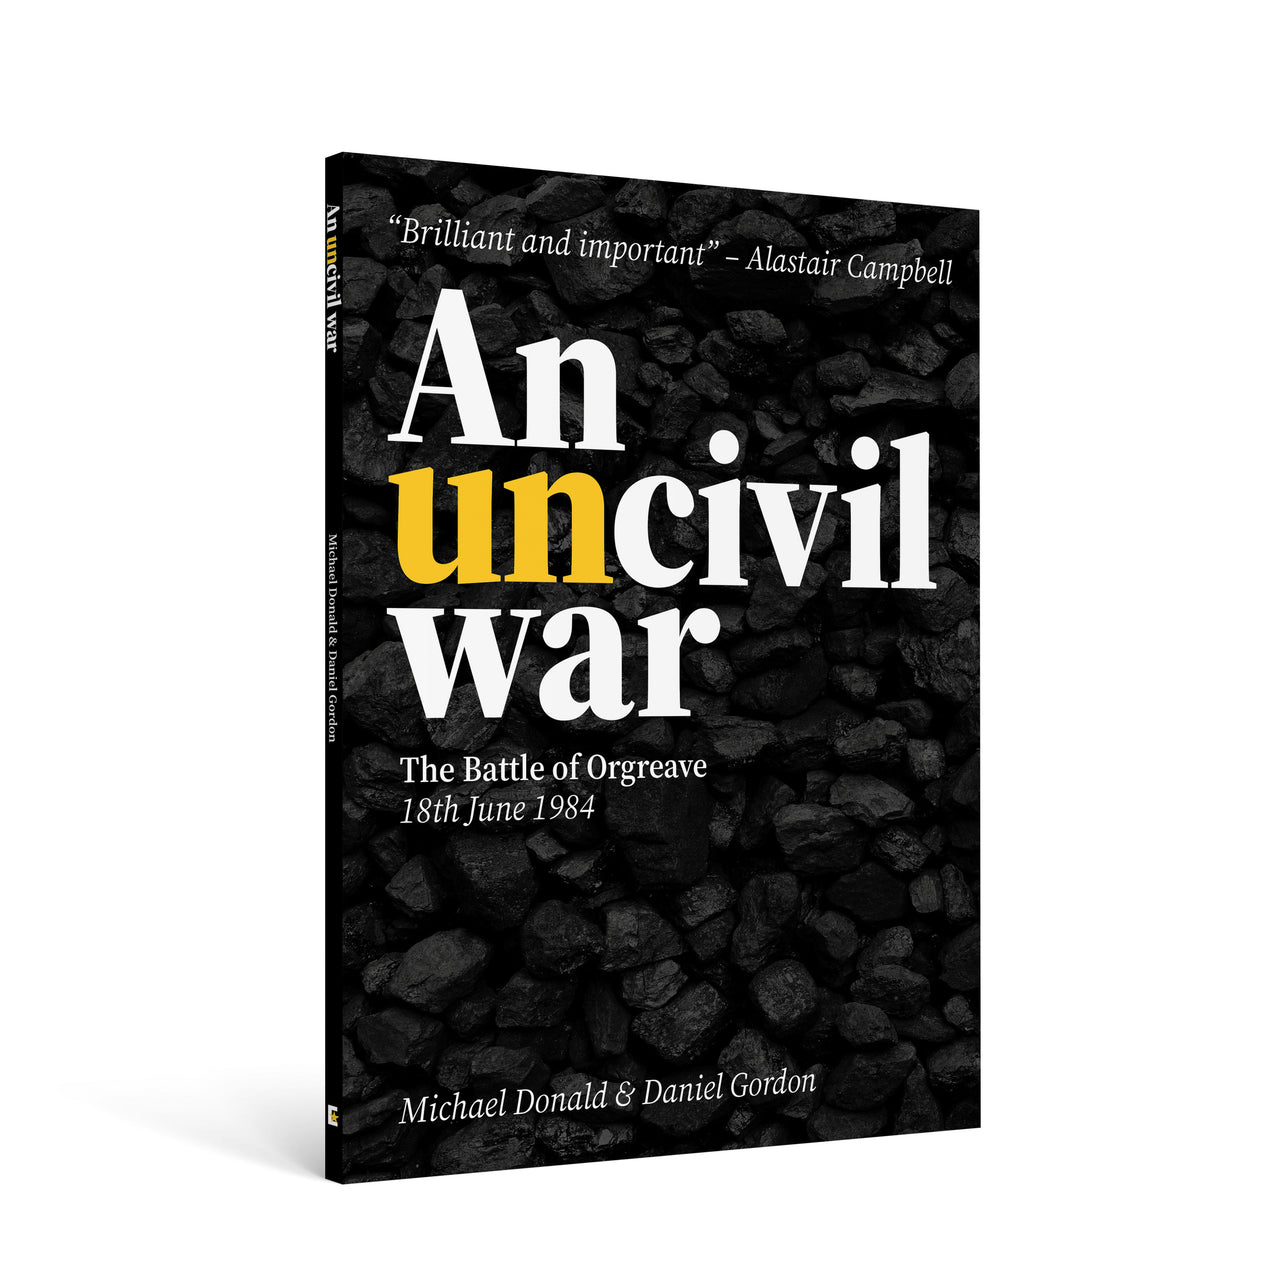 An uncivil war - The Battle of Orgreave